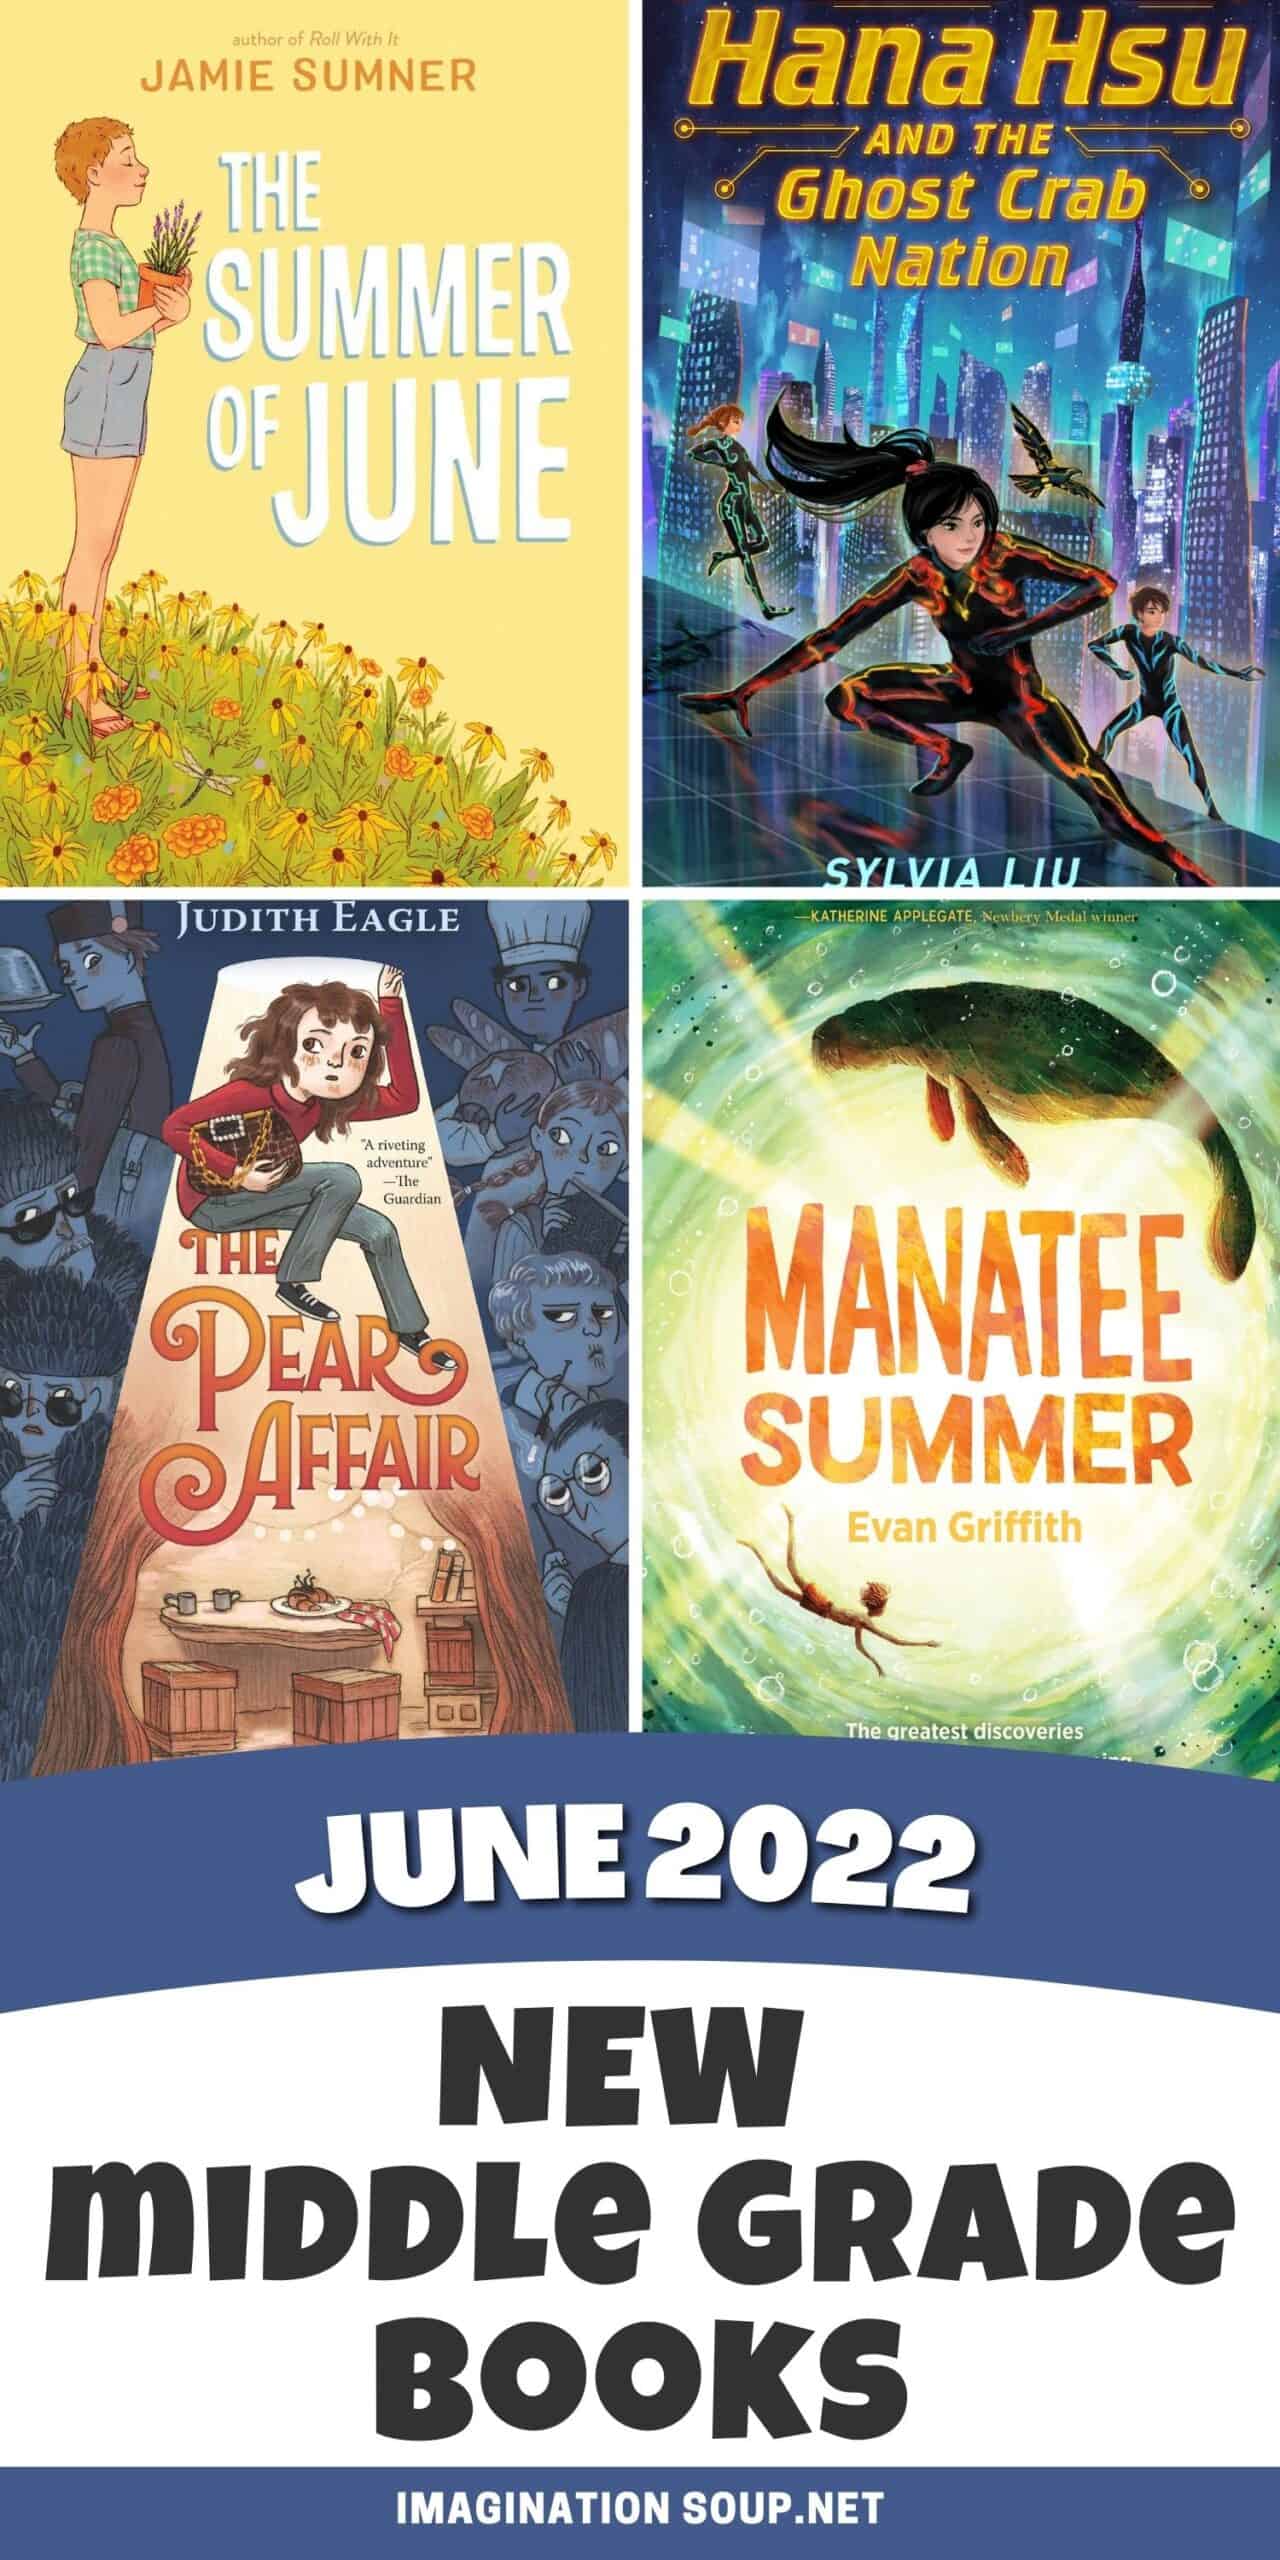 new middle grade books, June 2022